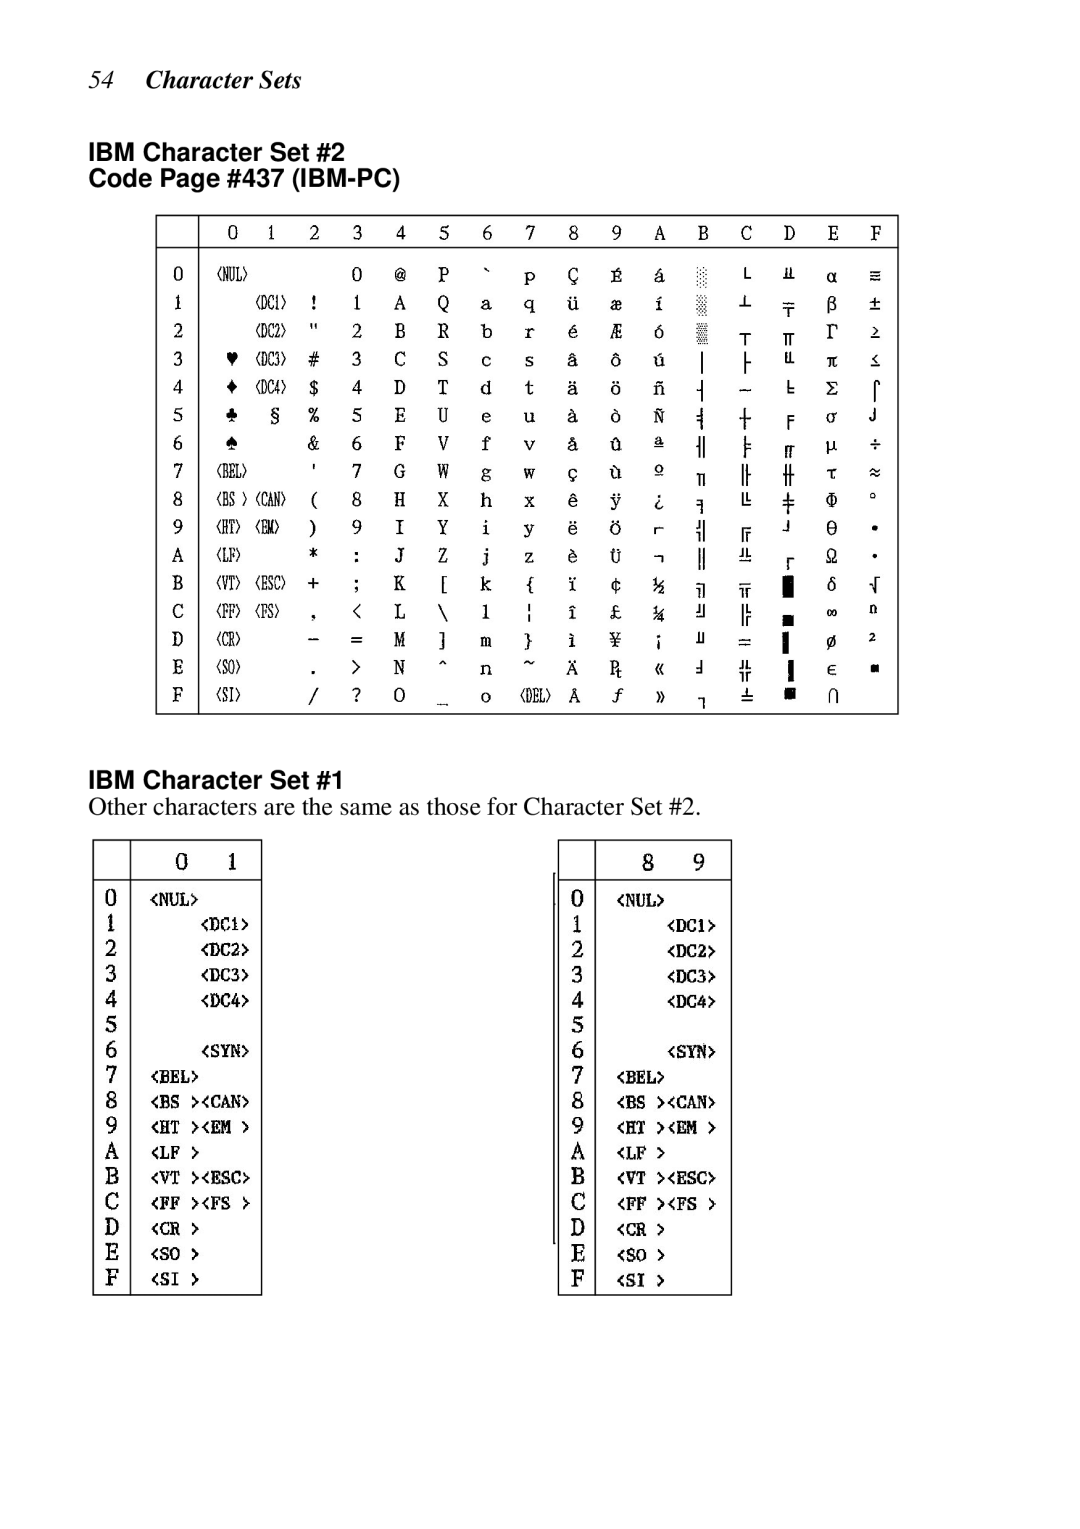 Star Micronics LC-8021 manual Character Sets, IBM Character Set #2 Code Page #437 IBM-PC IBM Character Set #1 